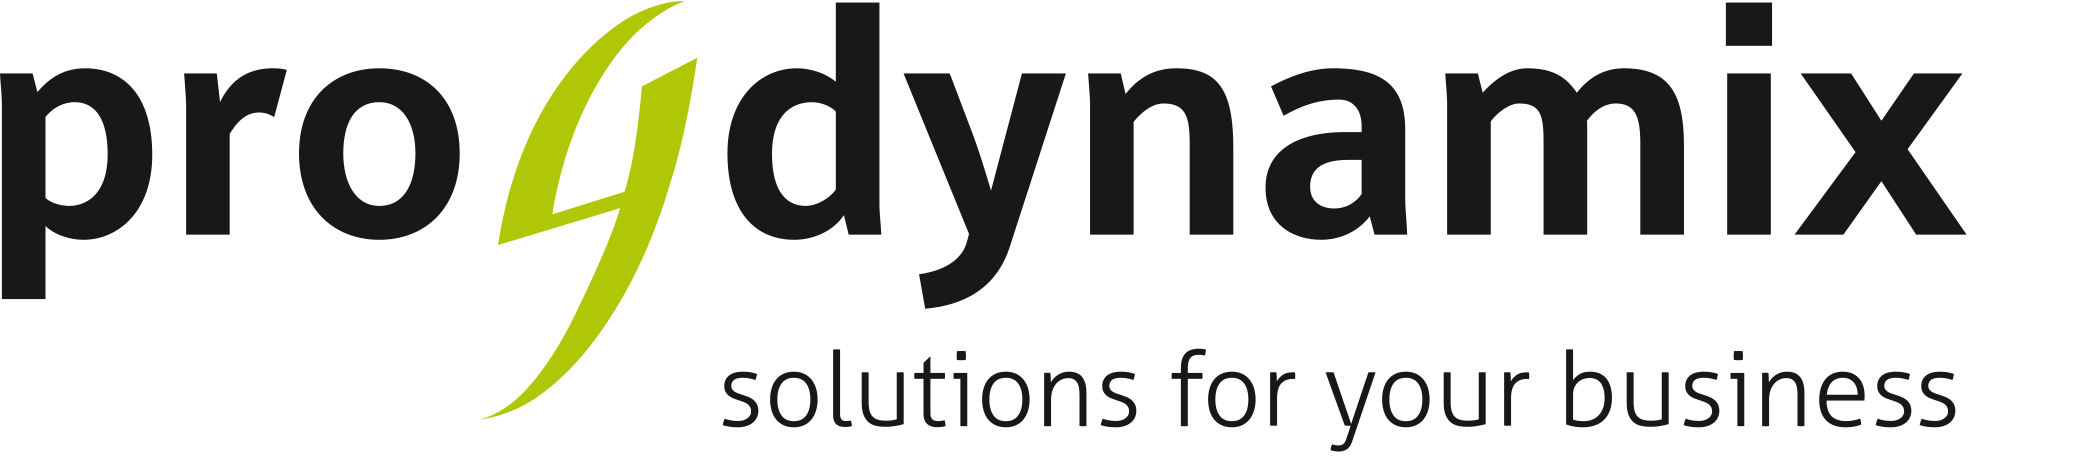 pro4dynamix GmbH